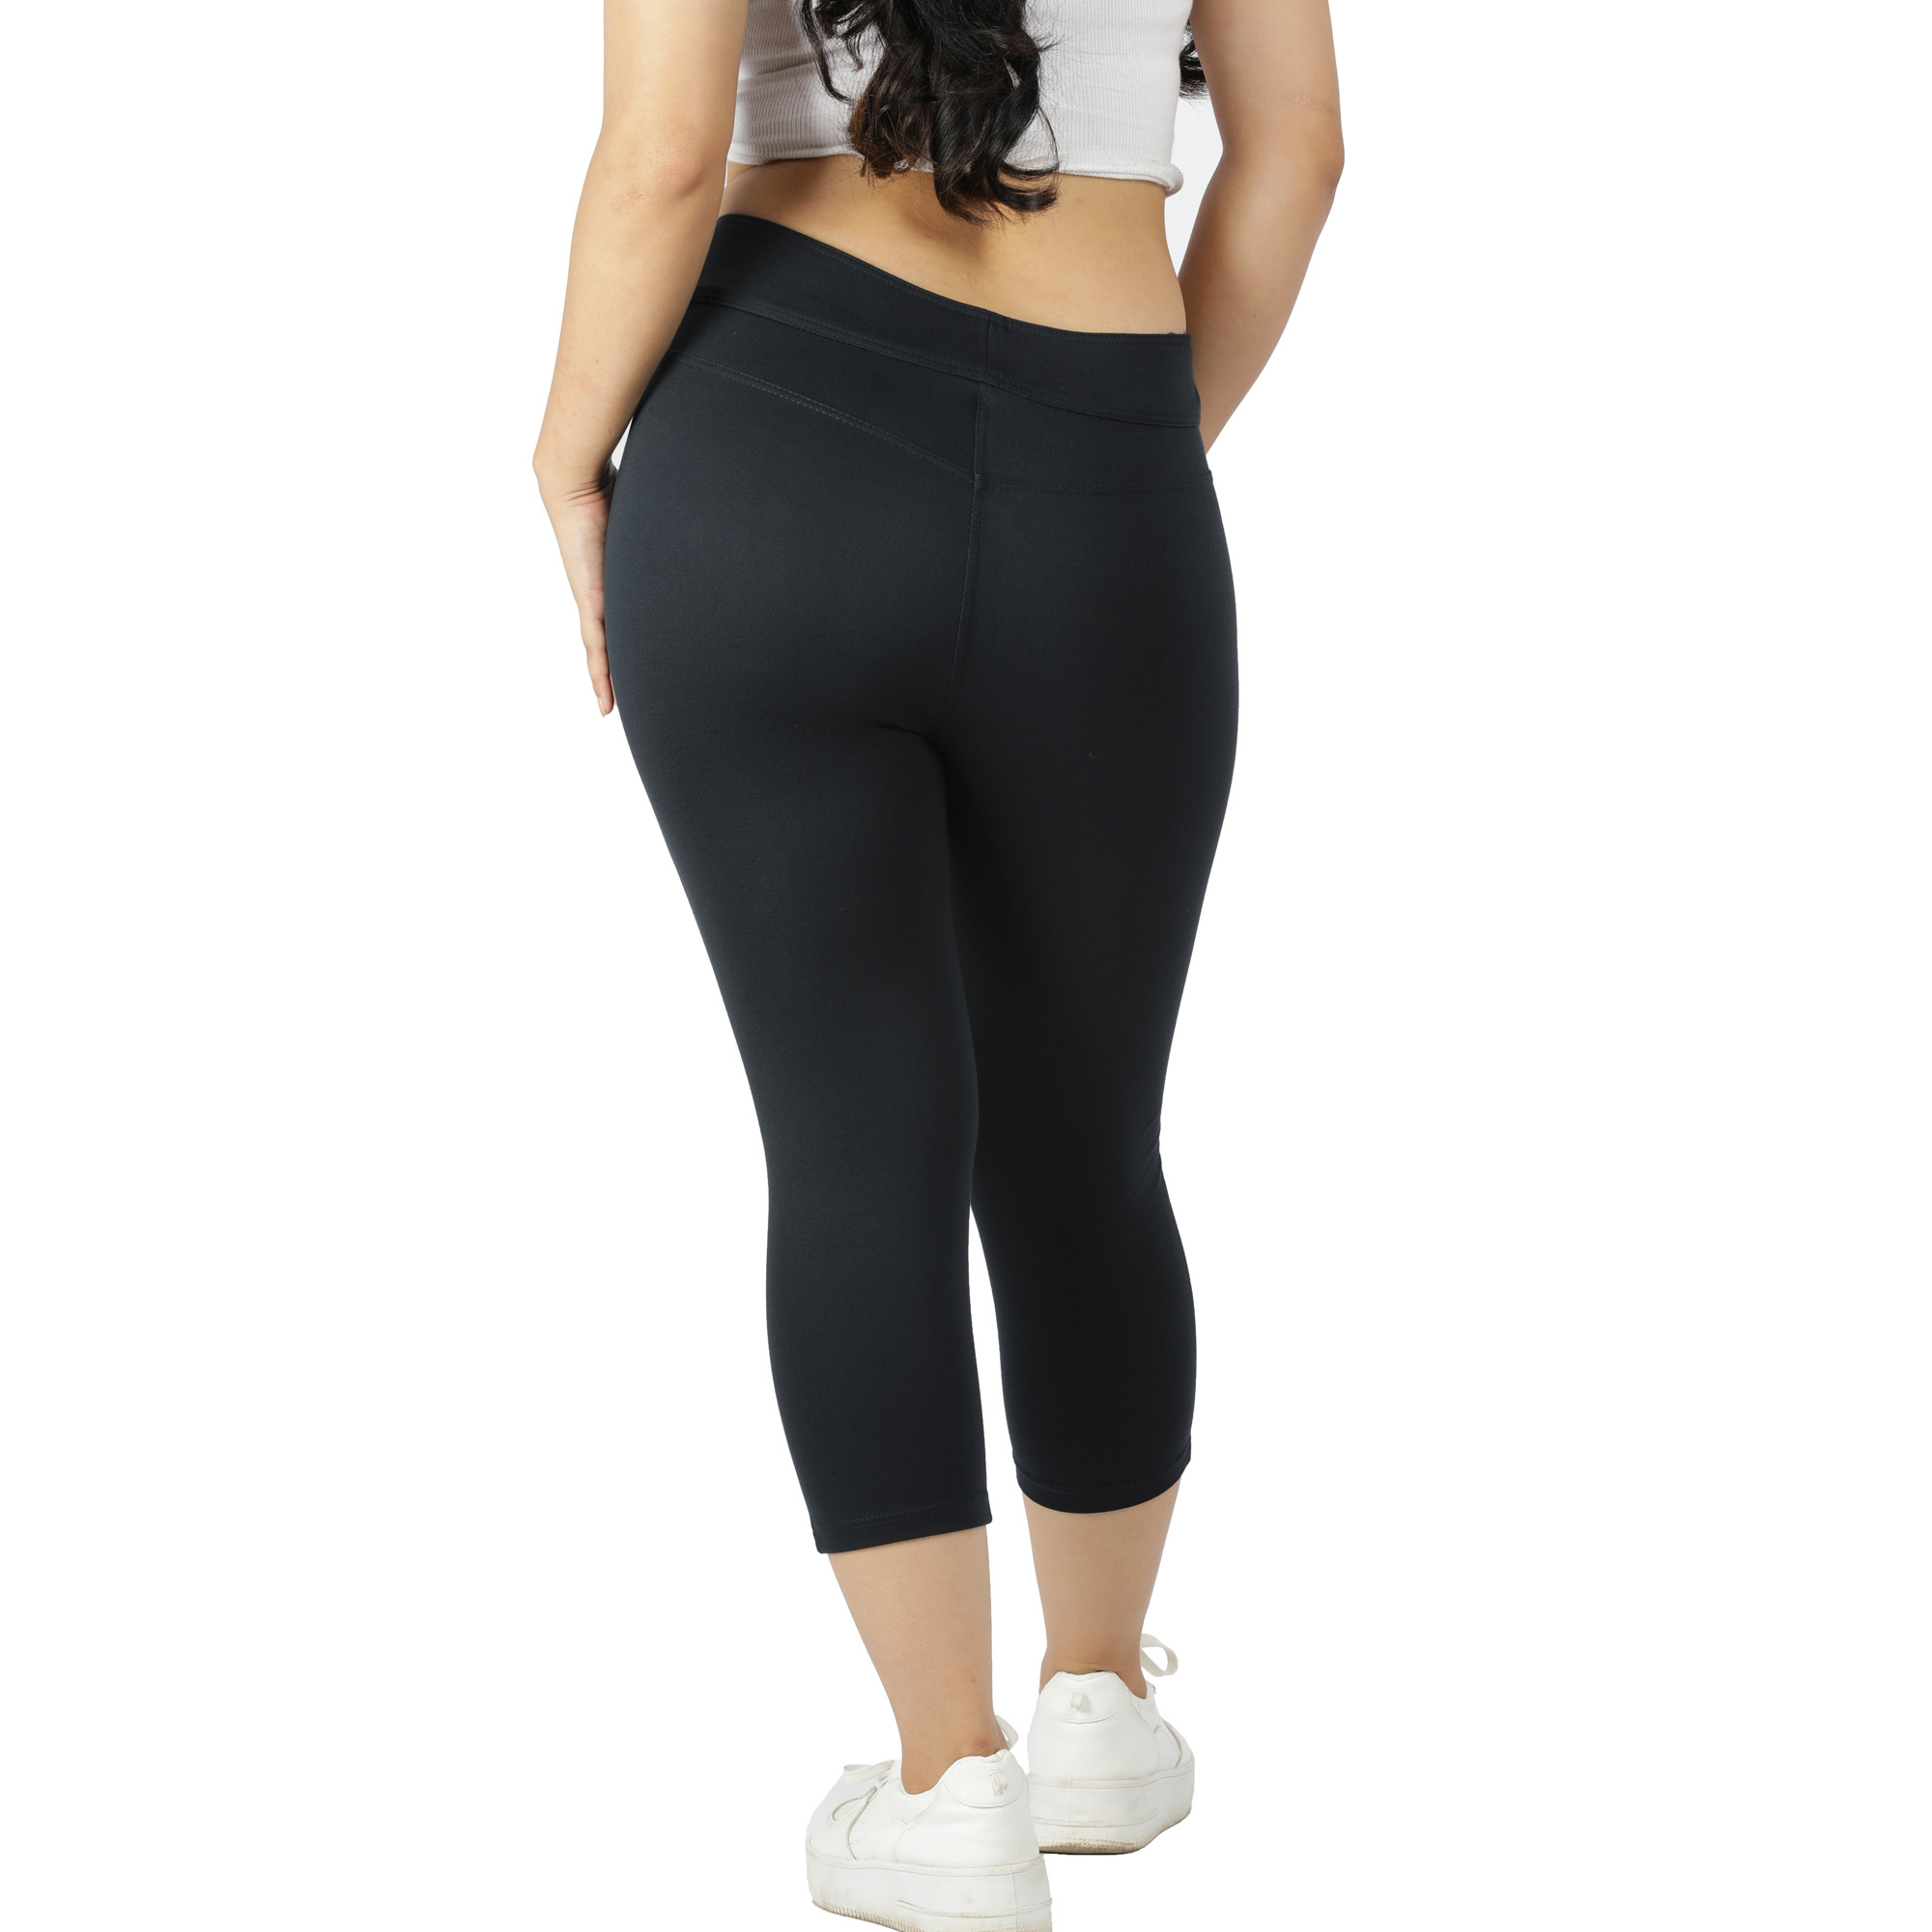 Buy Belore Slims Women 3/4 Length Tummy Tucker Capri - 4 Inch